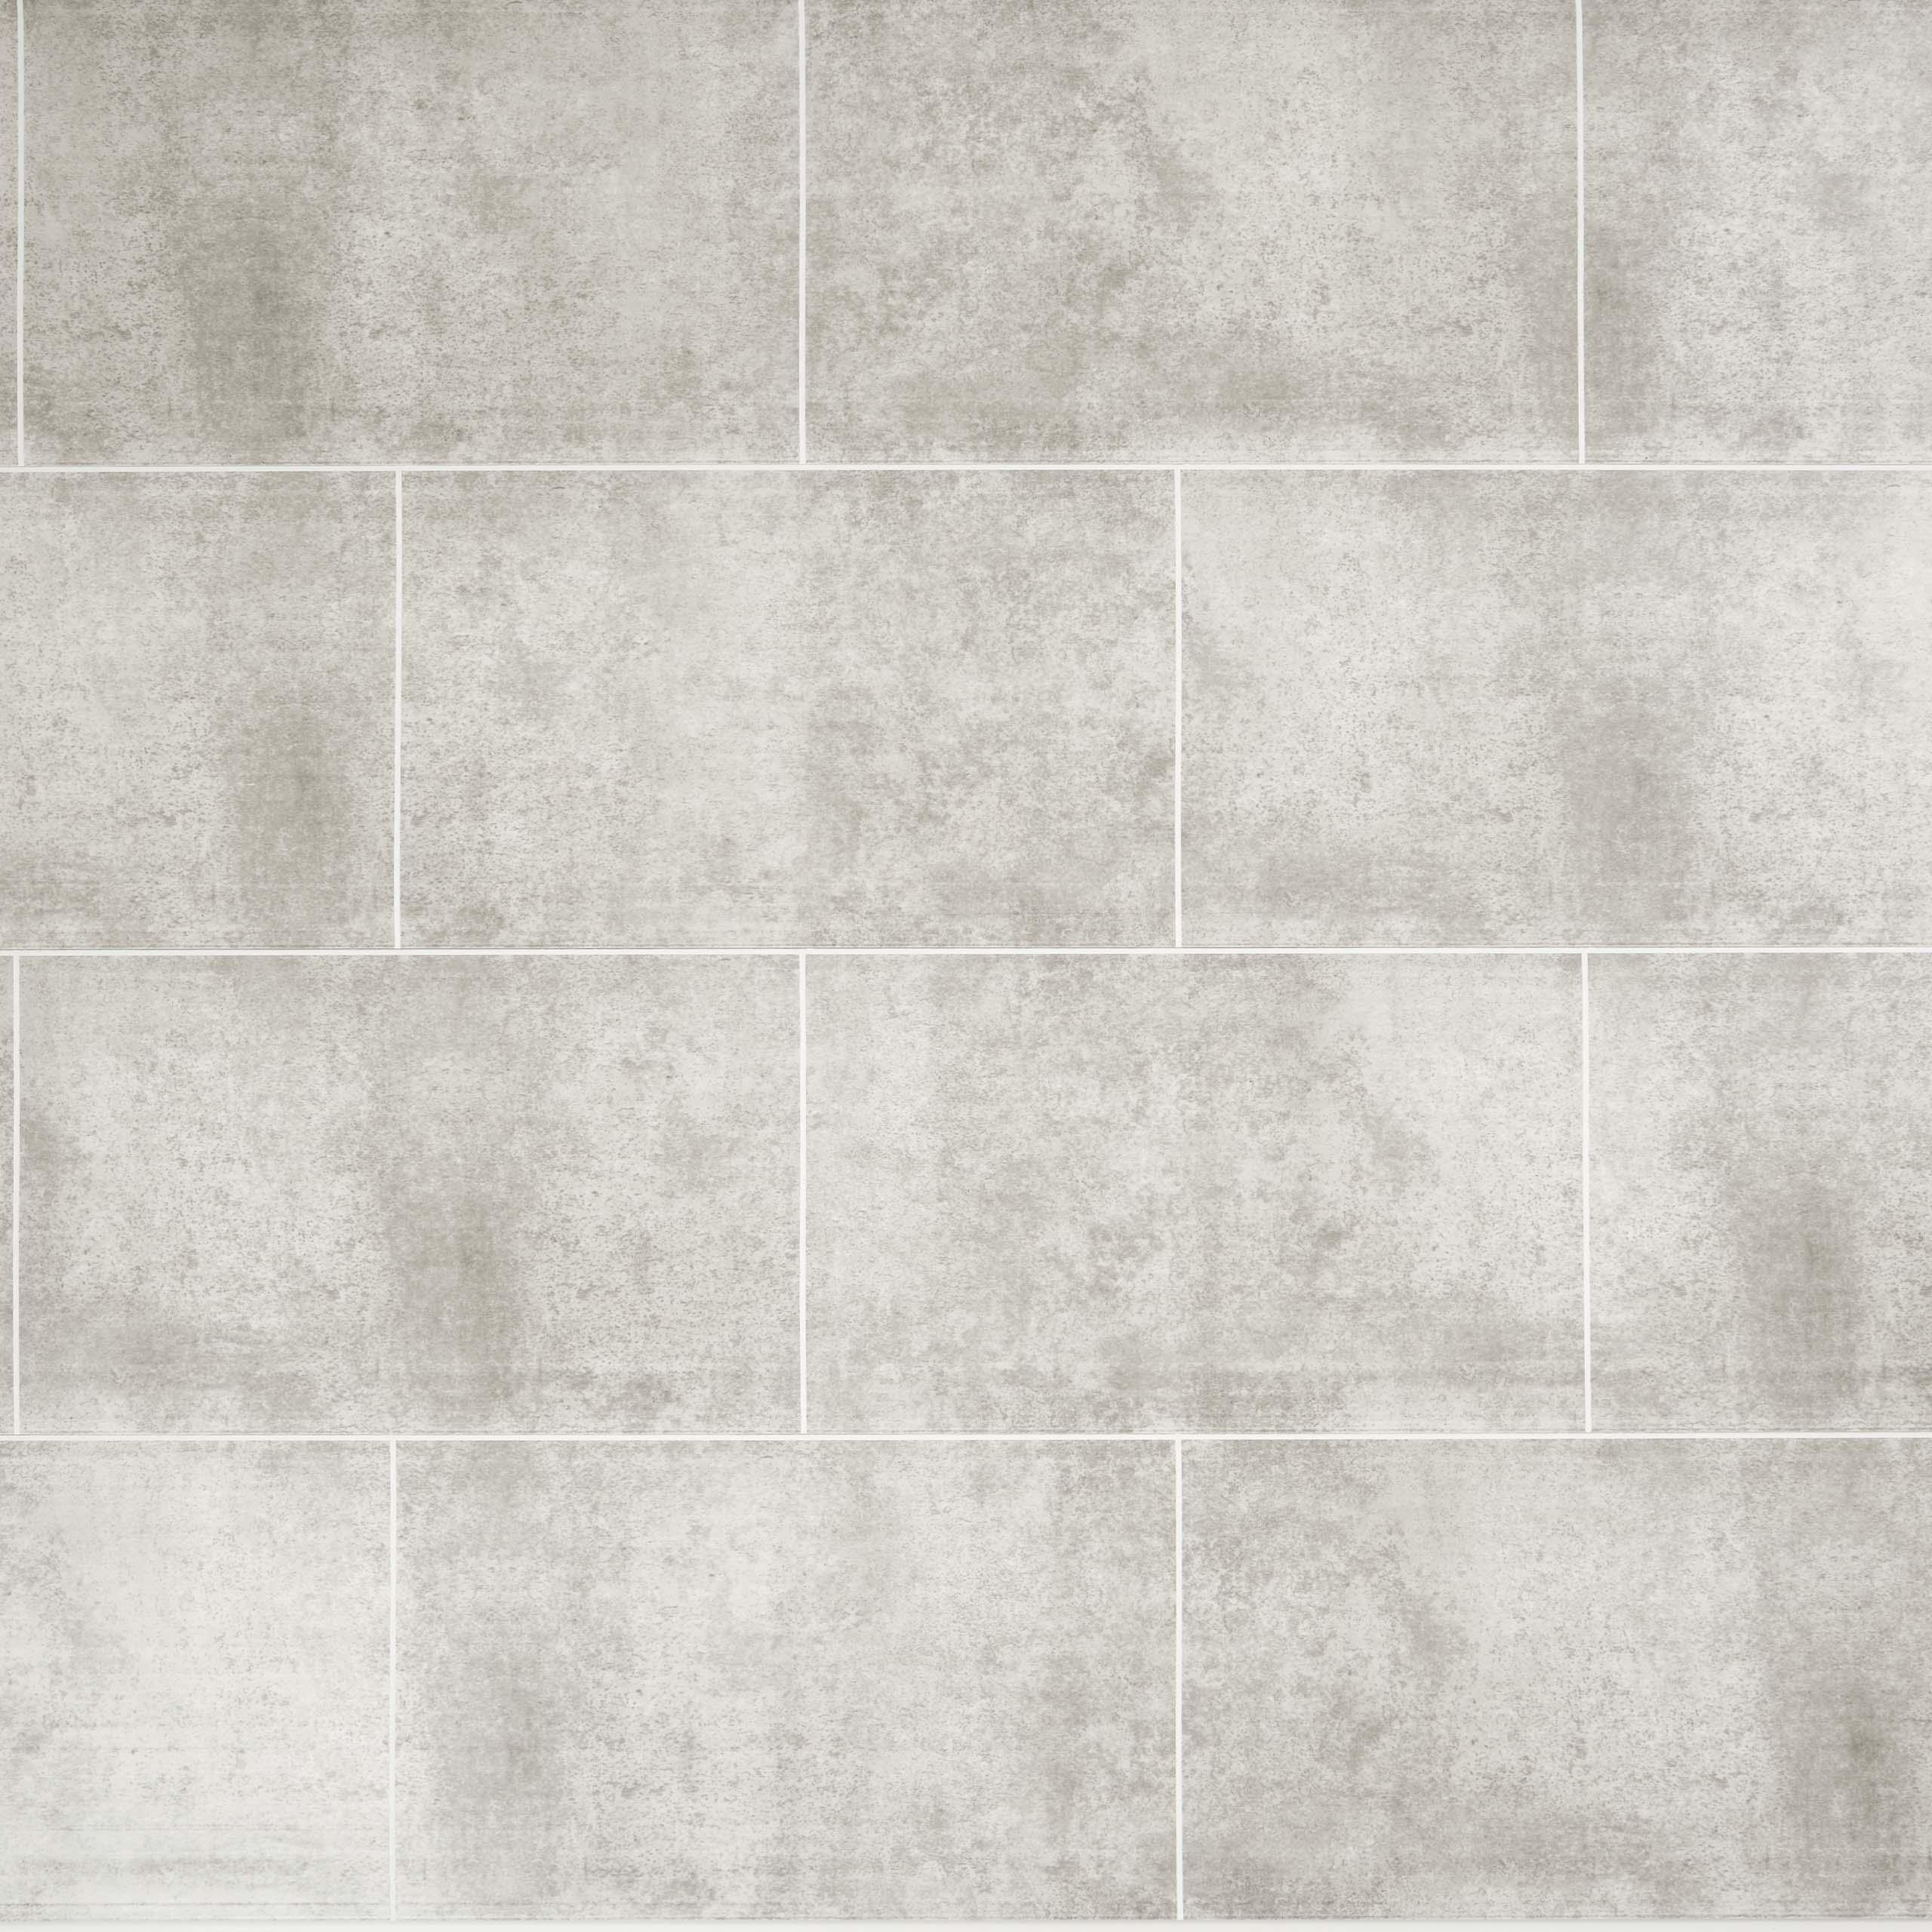 Proplas Wall Panel - Stone Grey Tile